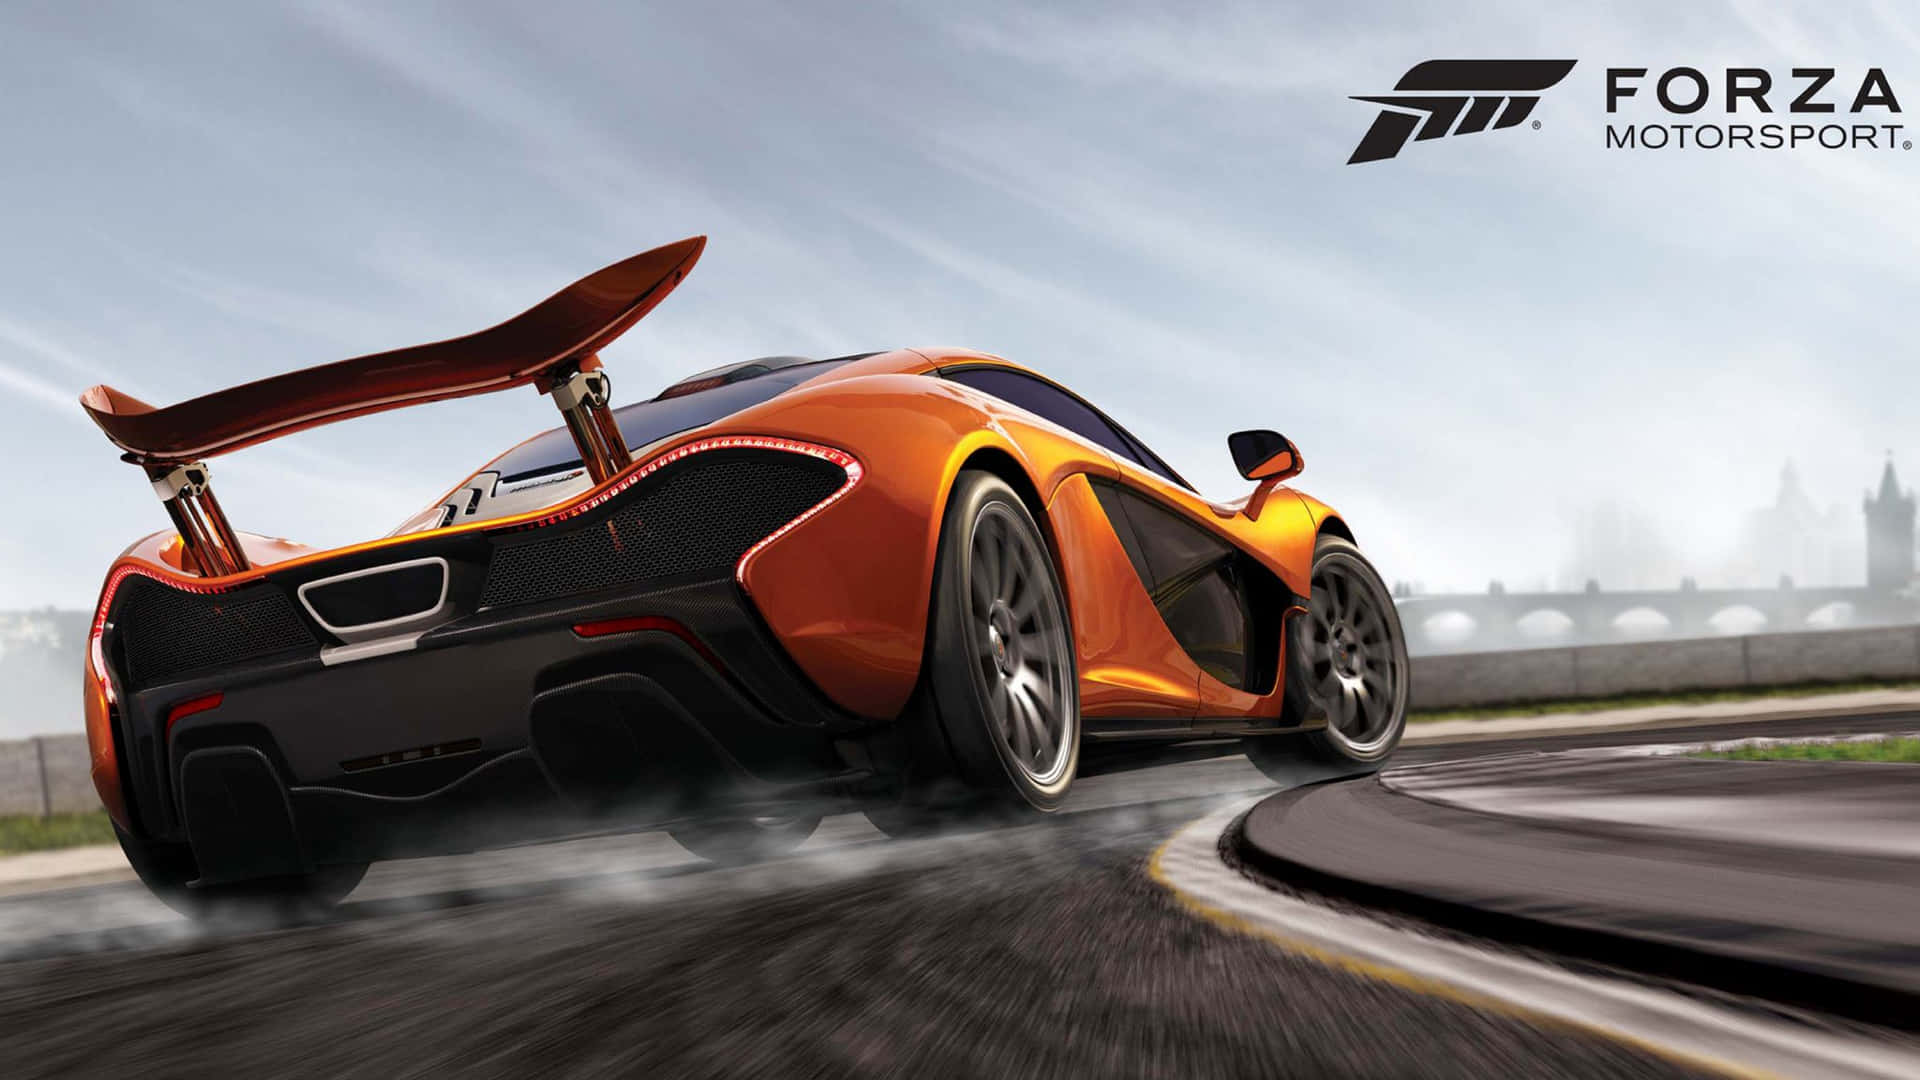 Forza Motorsport - Pc - Pc - Pc - Pc - Pc - Wallpaper